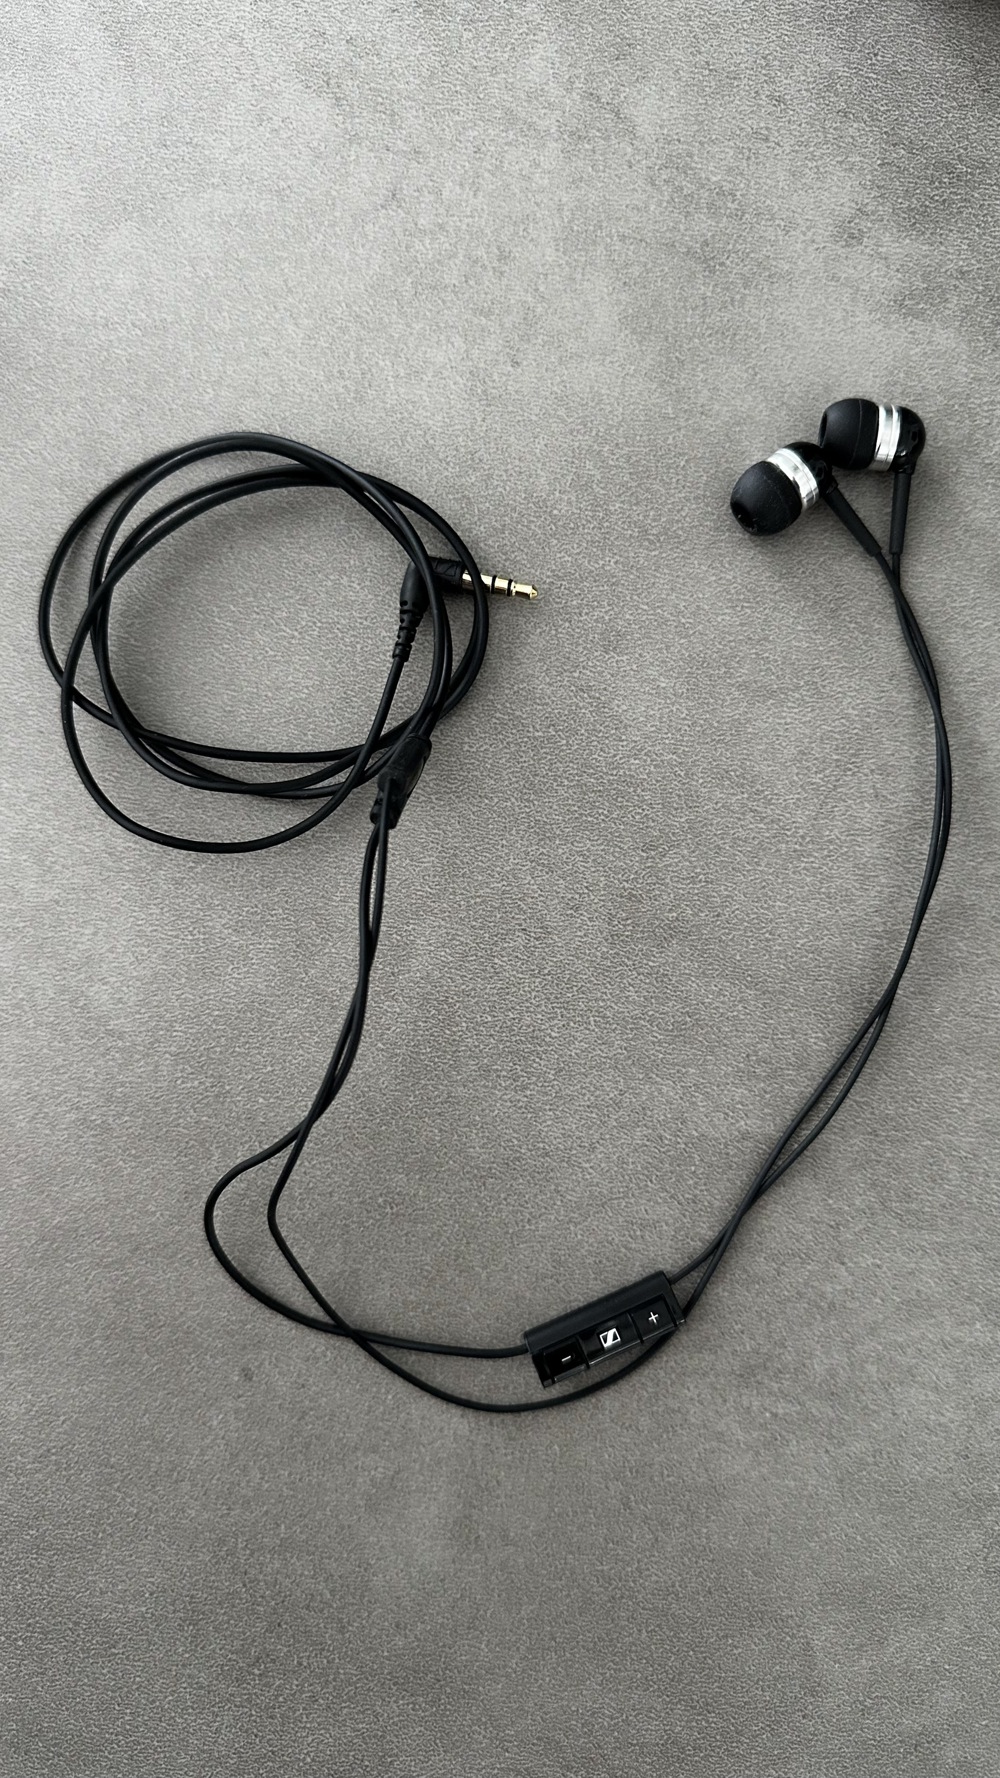 Sennheiser MM 30i Ohrkanal - Kopfhörer für iPod, iPhone & iPad